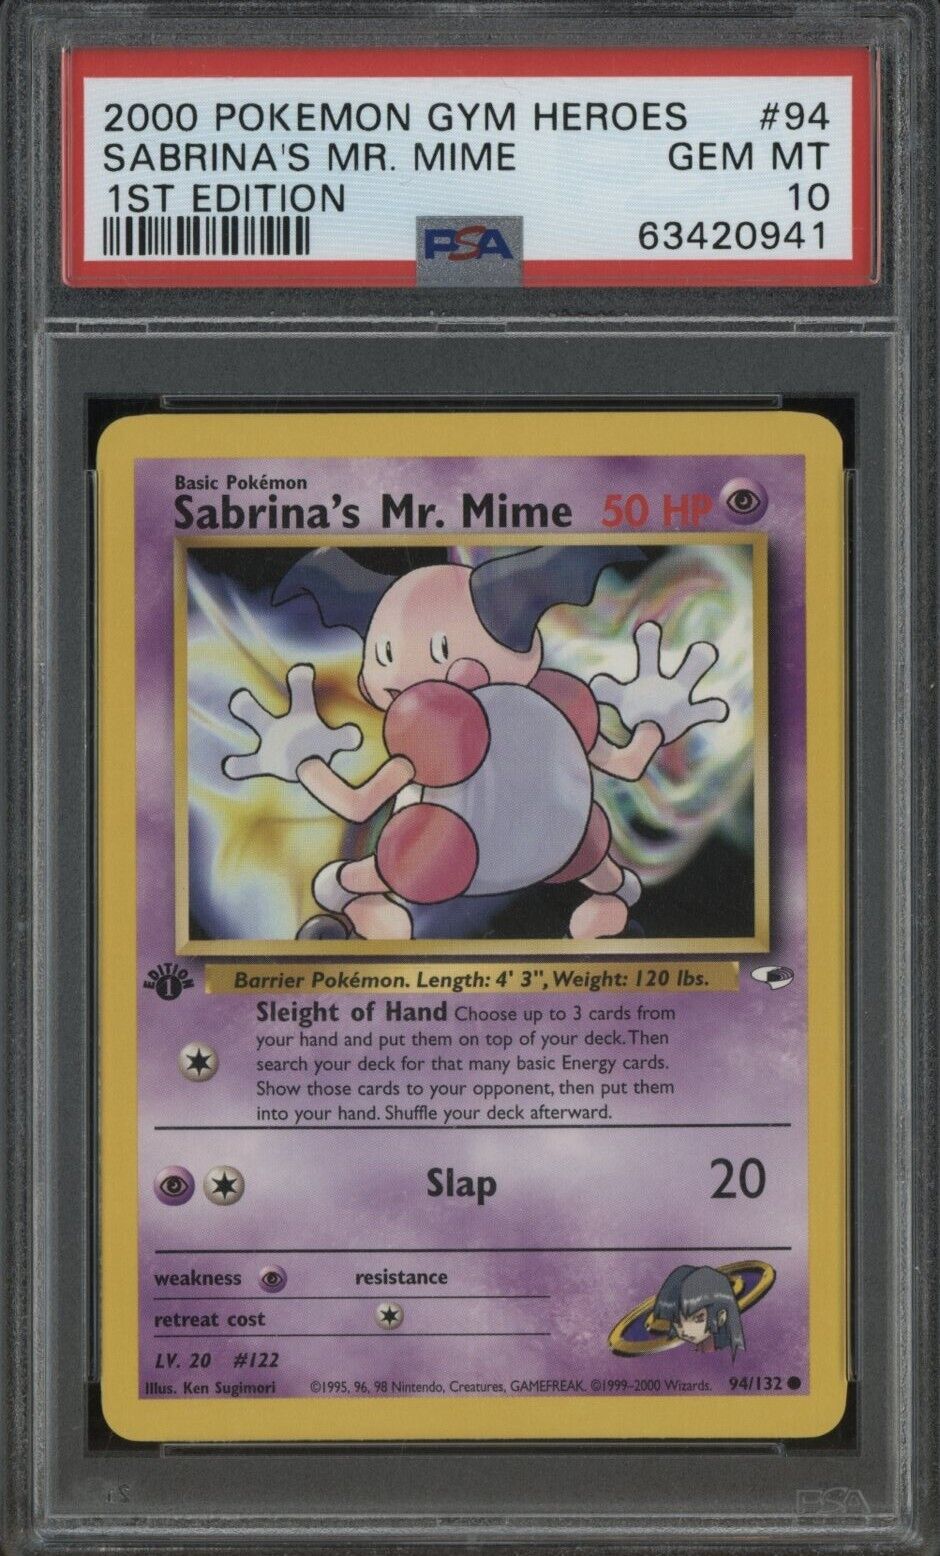 2000 Pokemon Gym Heroes 1st Edition #94 Sabrina's Mr. Mime PSA 10 GEM MINT